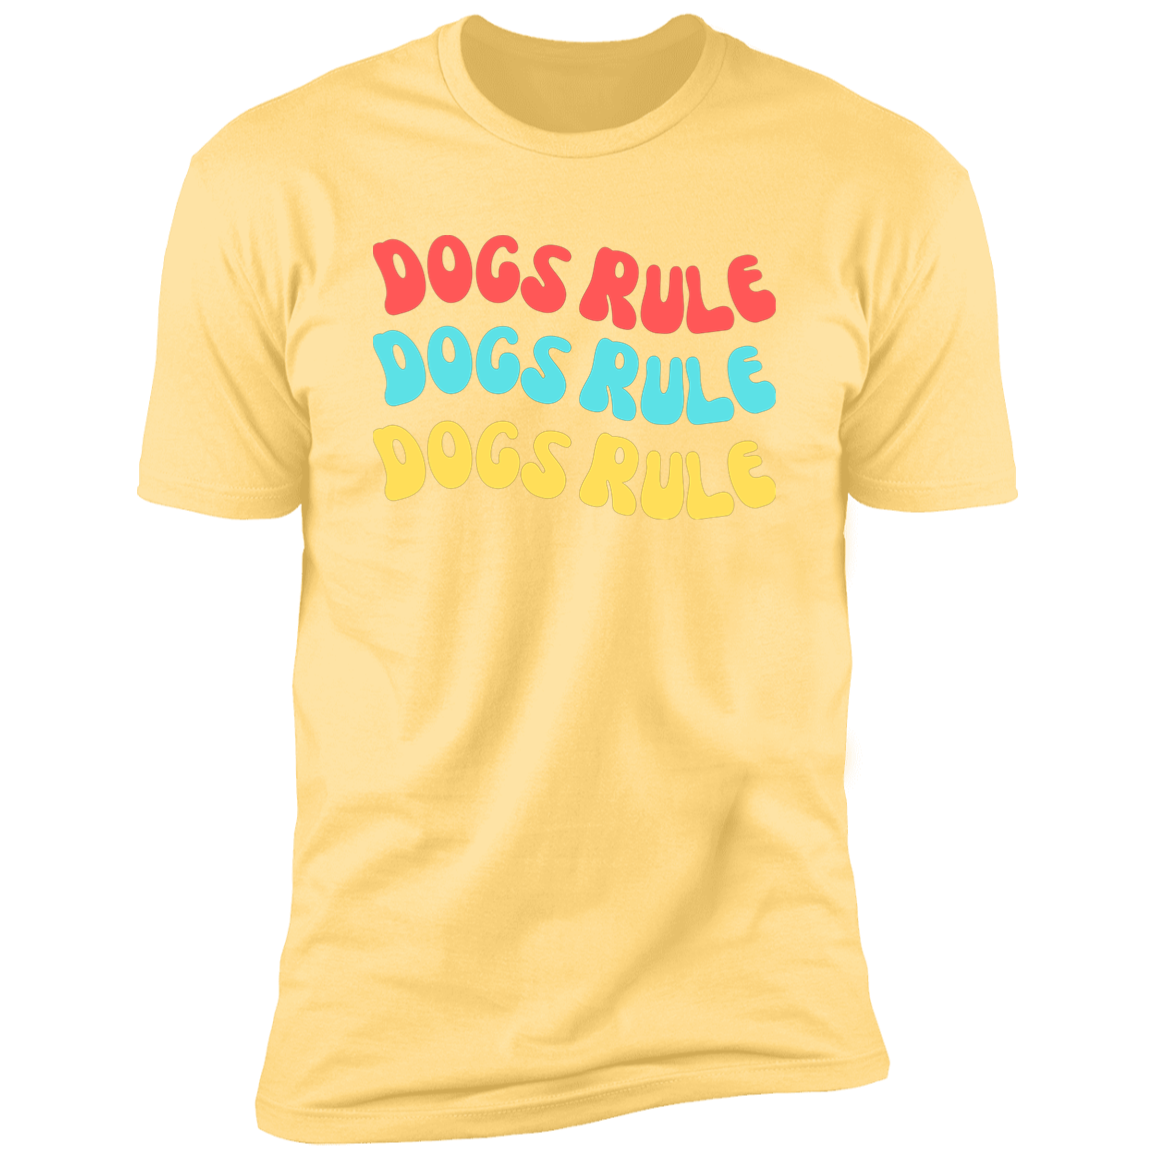 Dogs Rule Dog Shirt, dog shirt for humans, dog mom and dog dad shirt, in banana cream